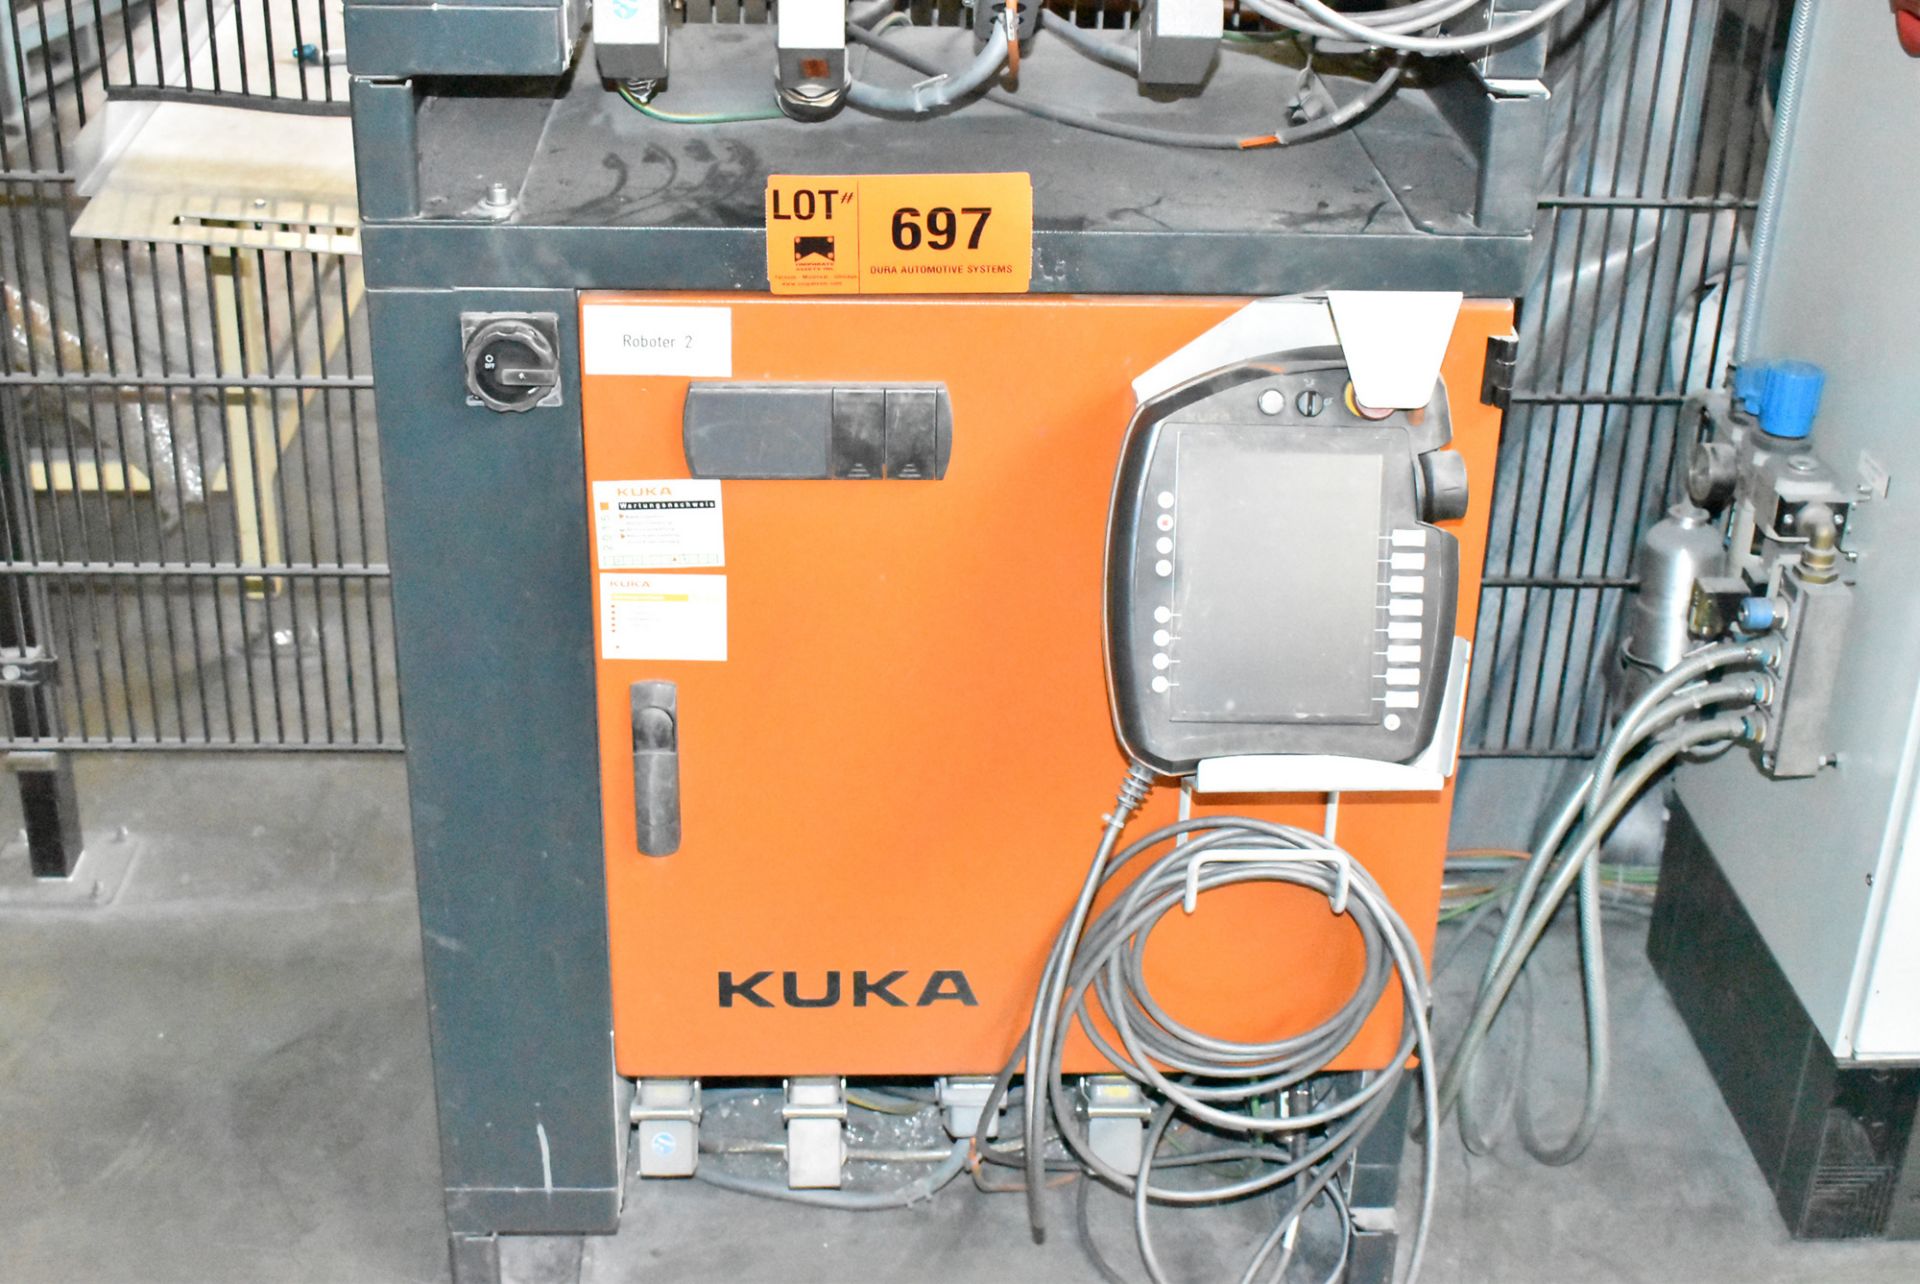 KUKA (2012) KR 30-3 6 AXIS ROBOT WITH KUKA KRC4 CONTROL & TEACH PENDANT, 50 KG LOAD CAP., S/N 696625